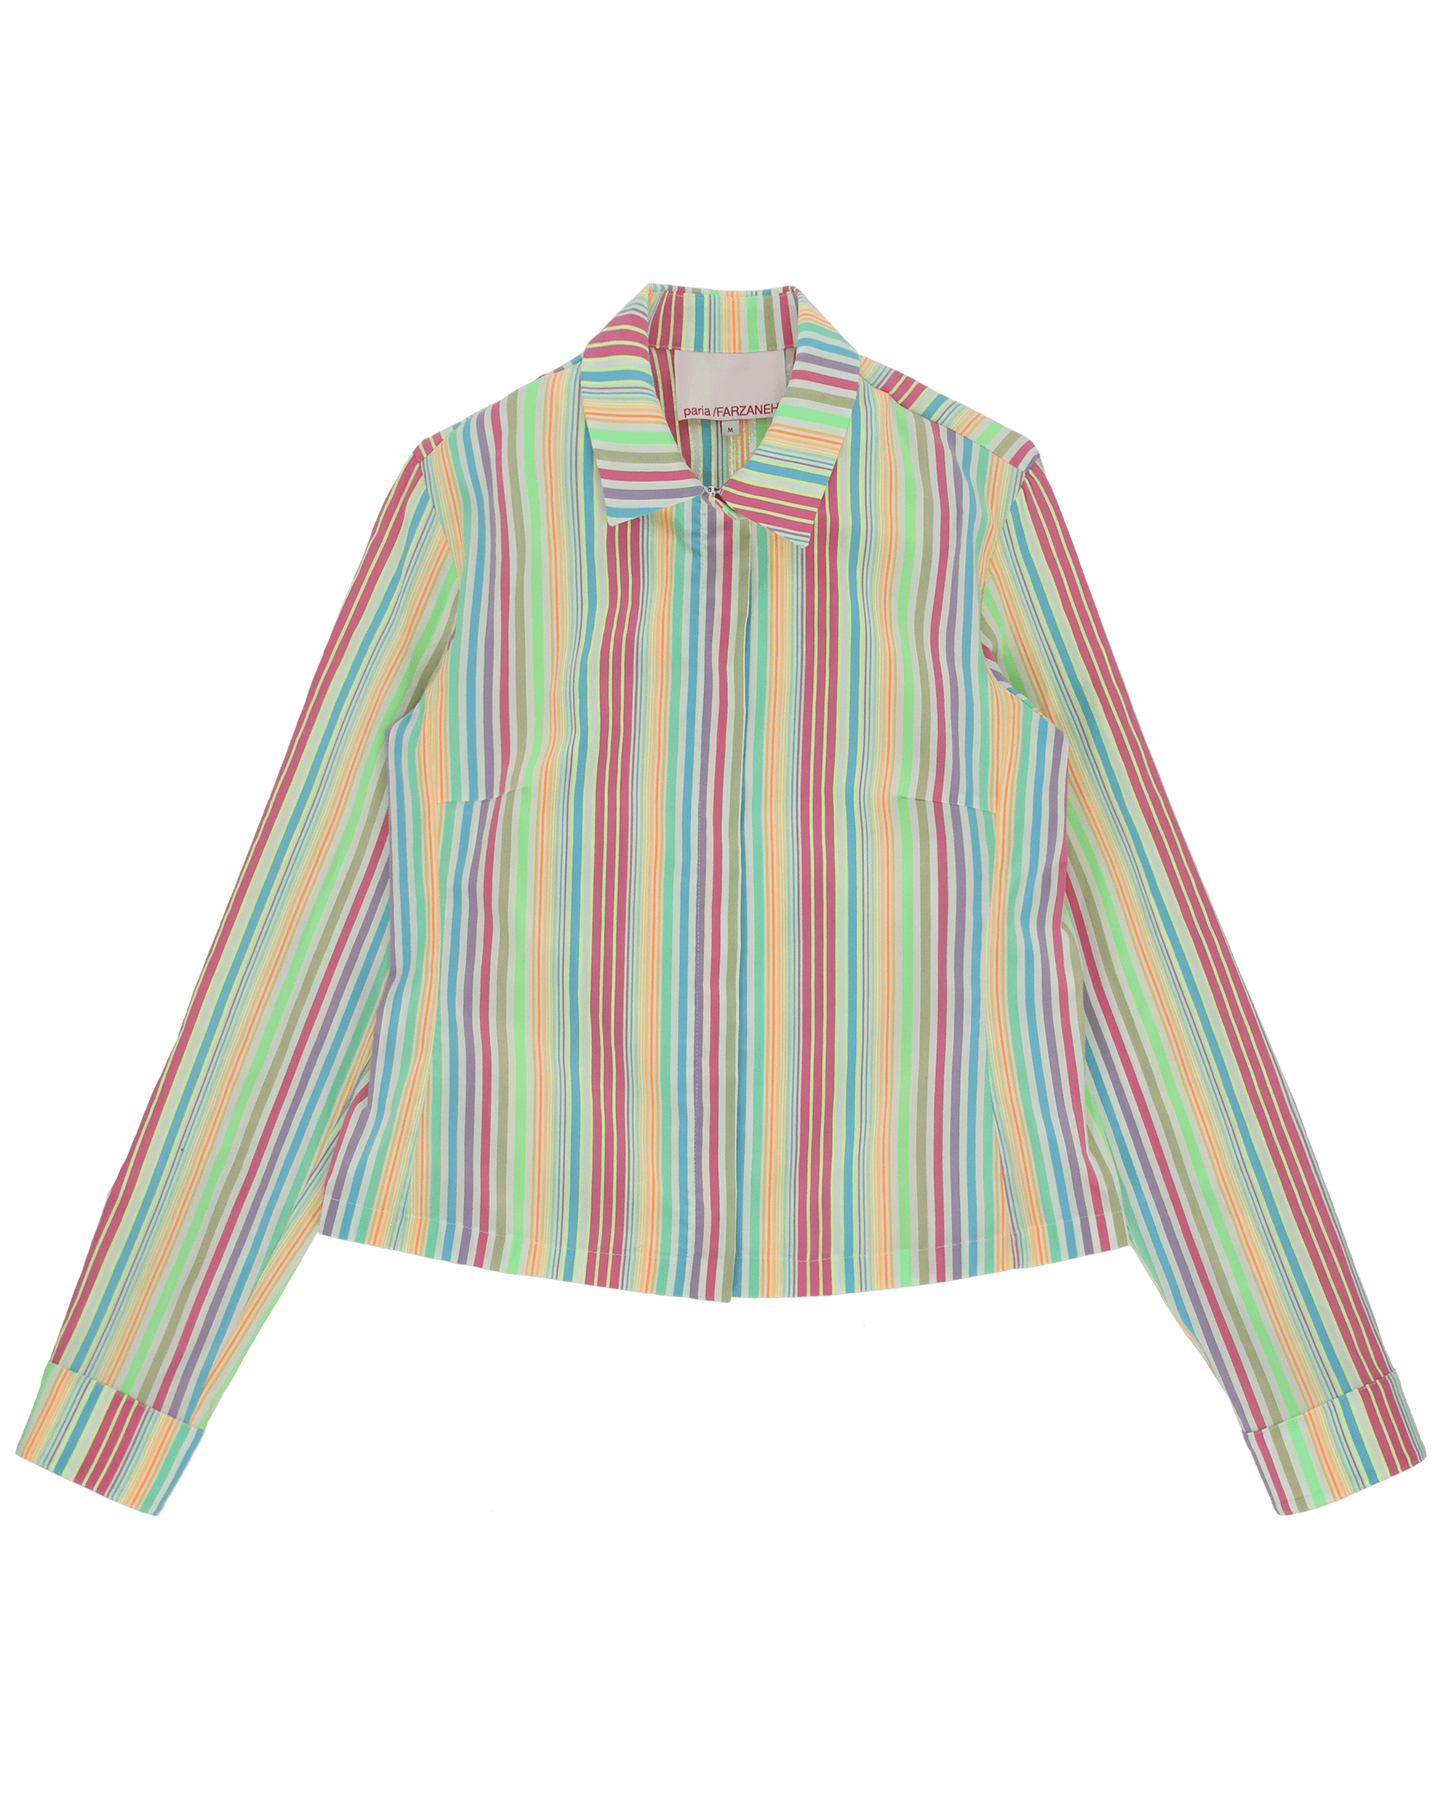 Paria Farzaneh Clown Stripe Multi Shirts Longsleeve PFT0046 001